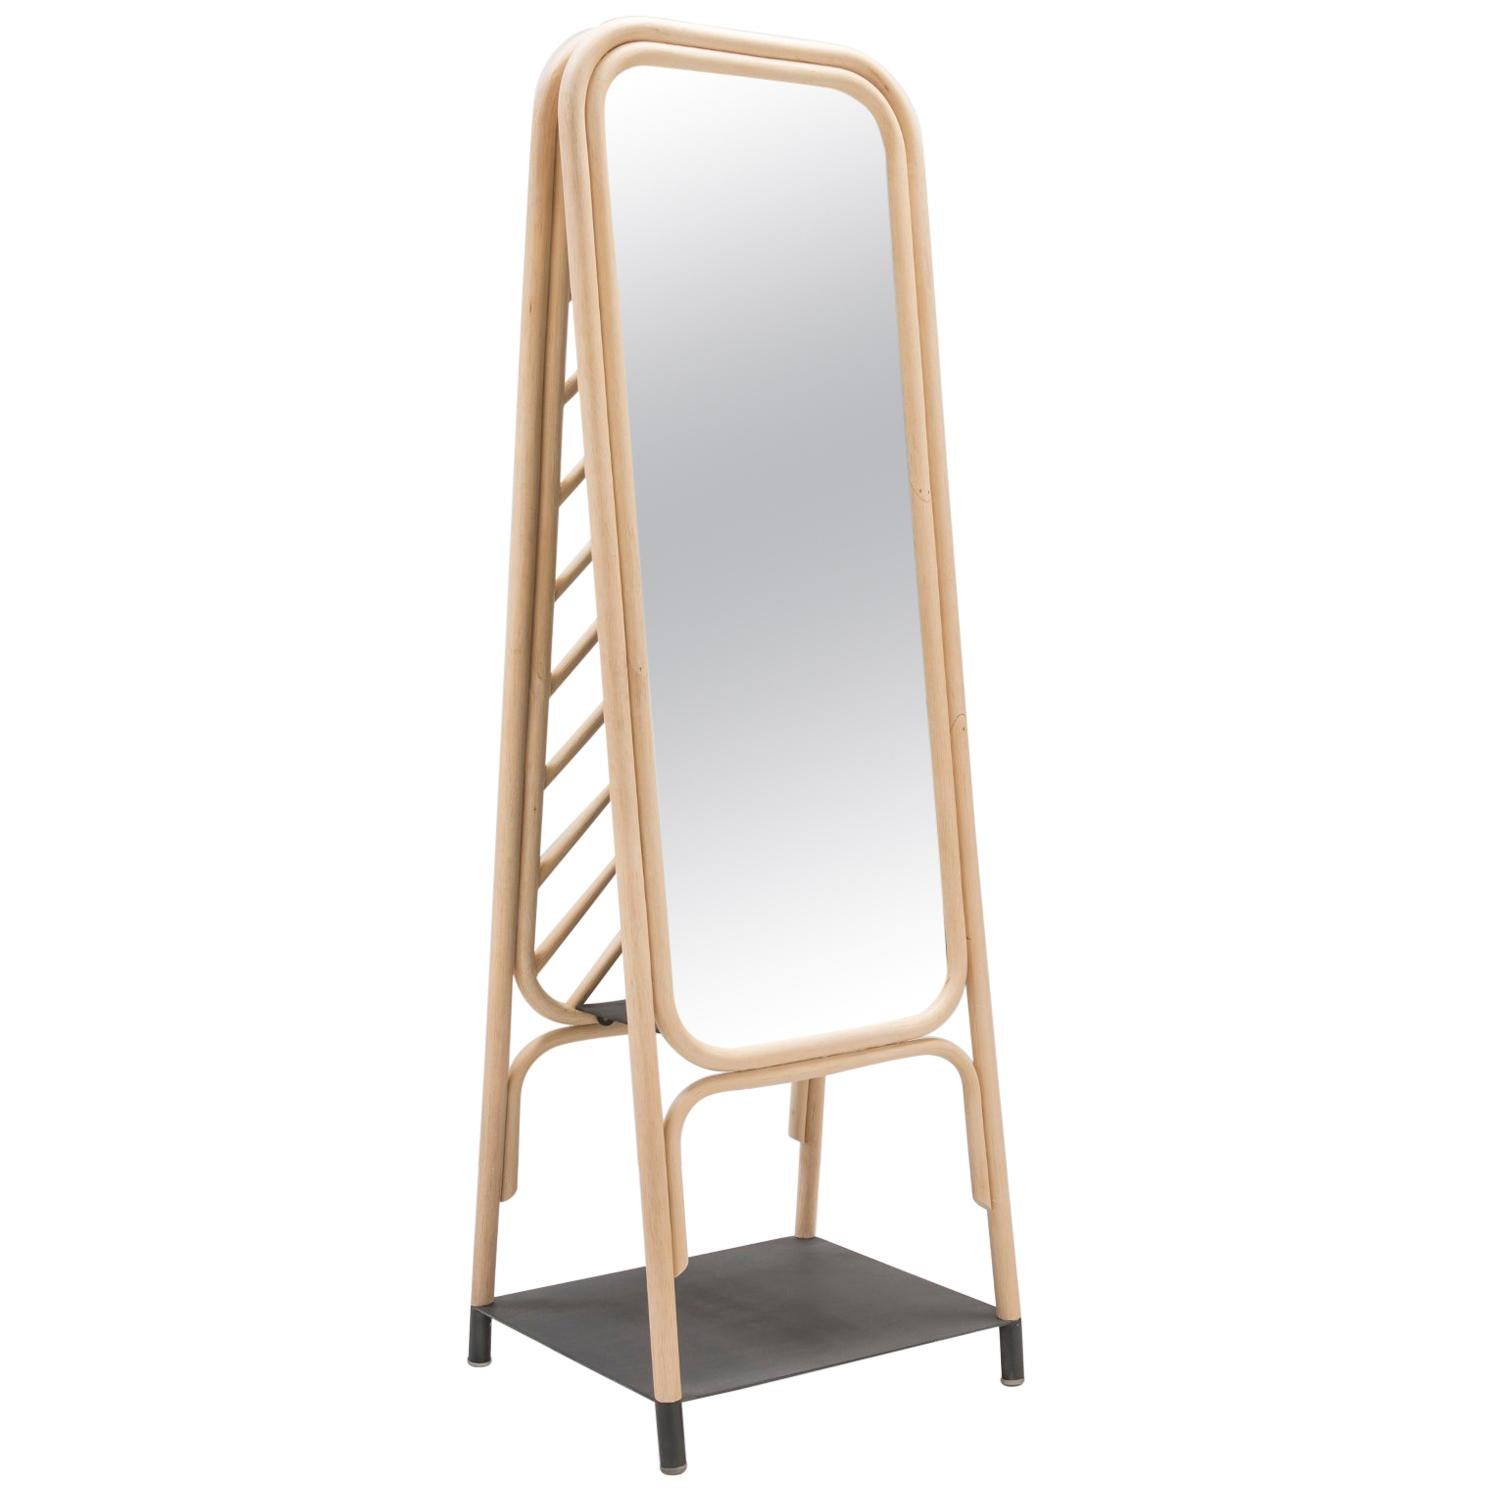 Floor Rattan Mirror 'Psyché' French Modern Design